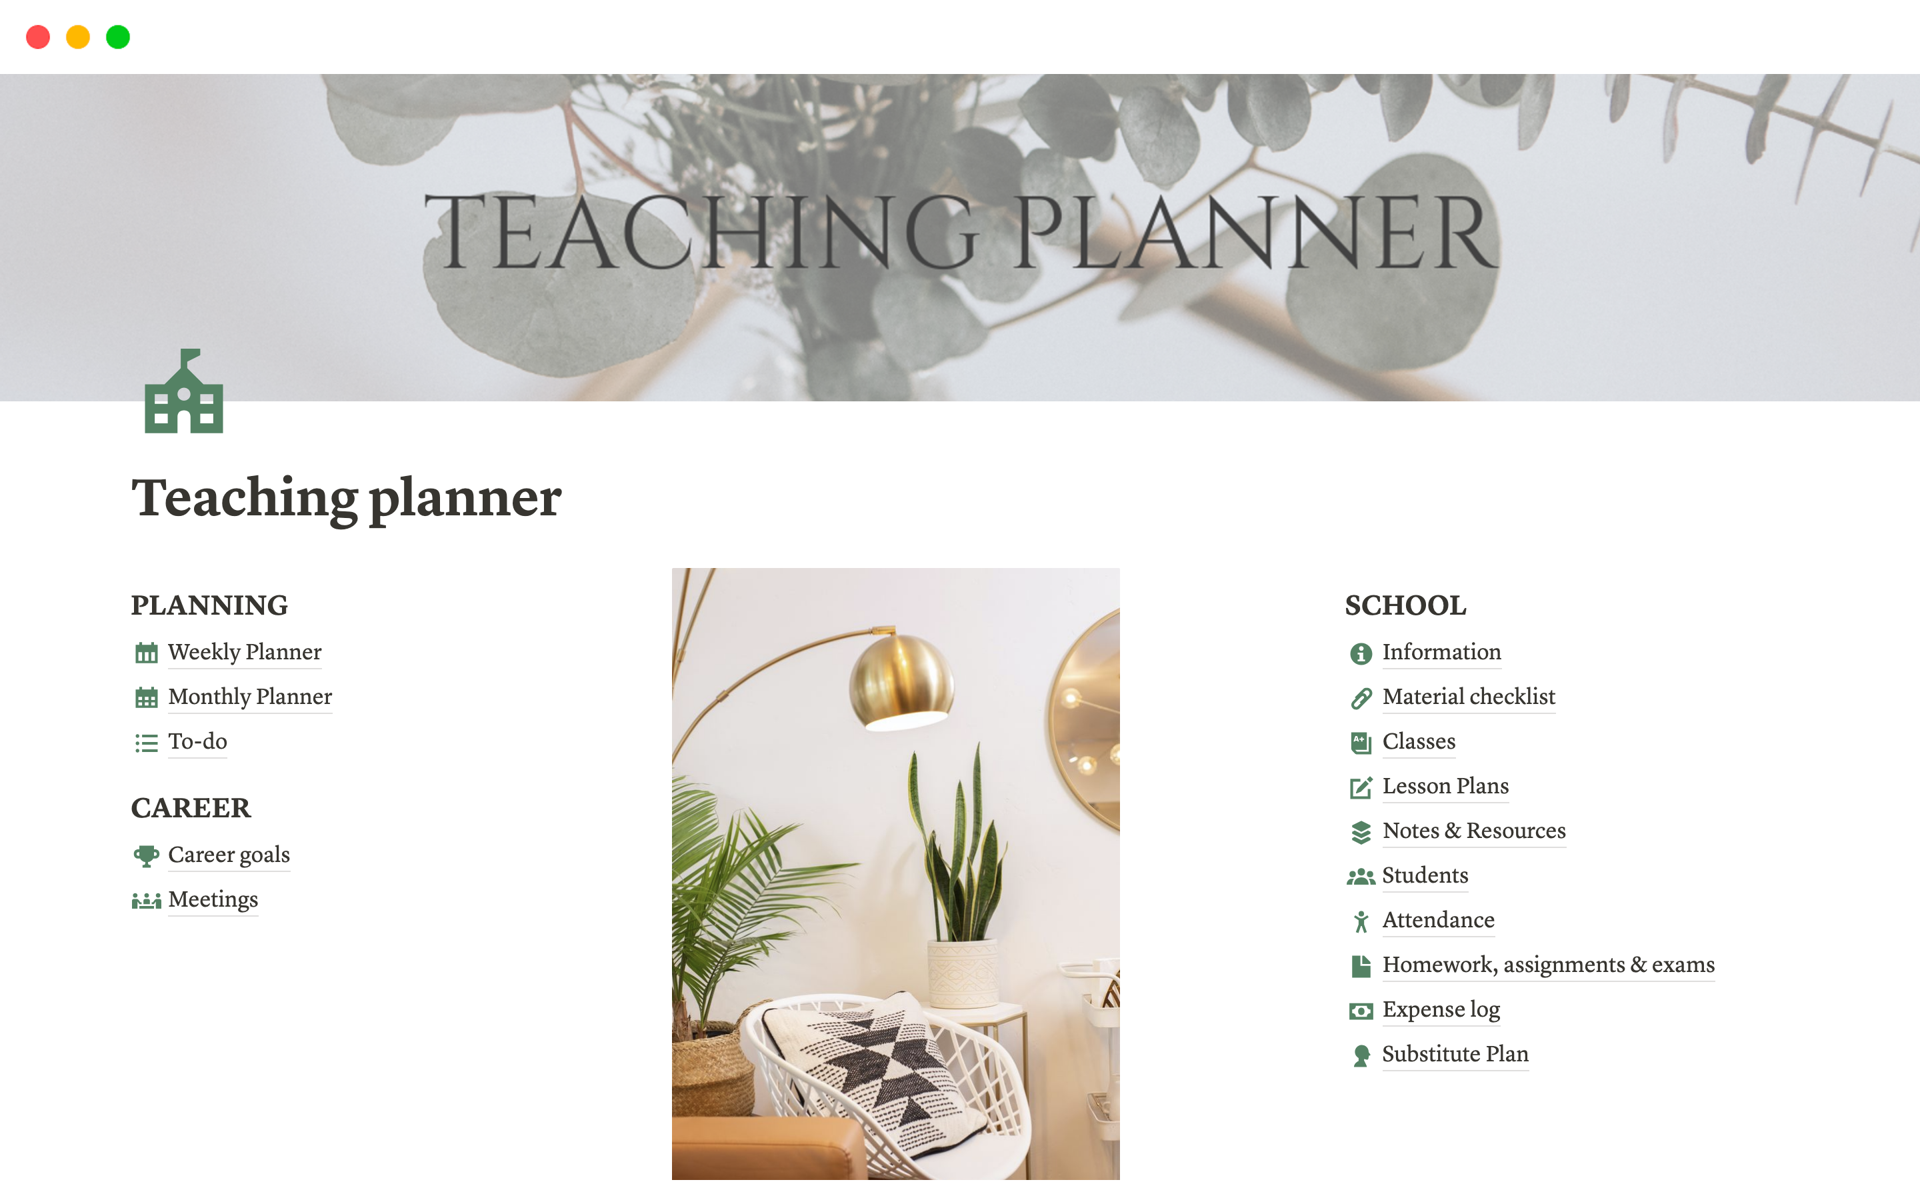 Aperçu du modèle de Teacher planner